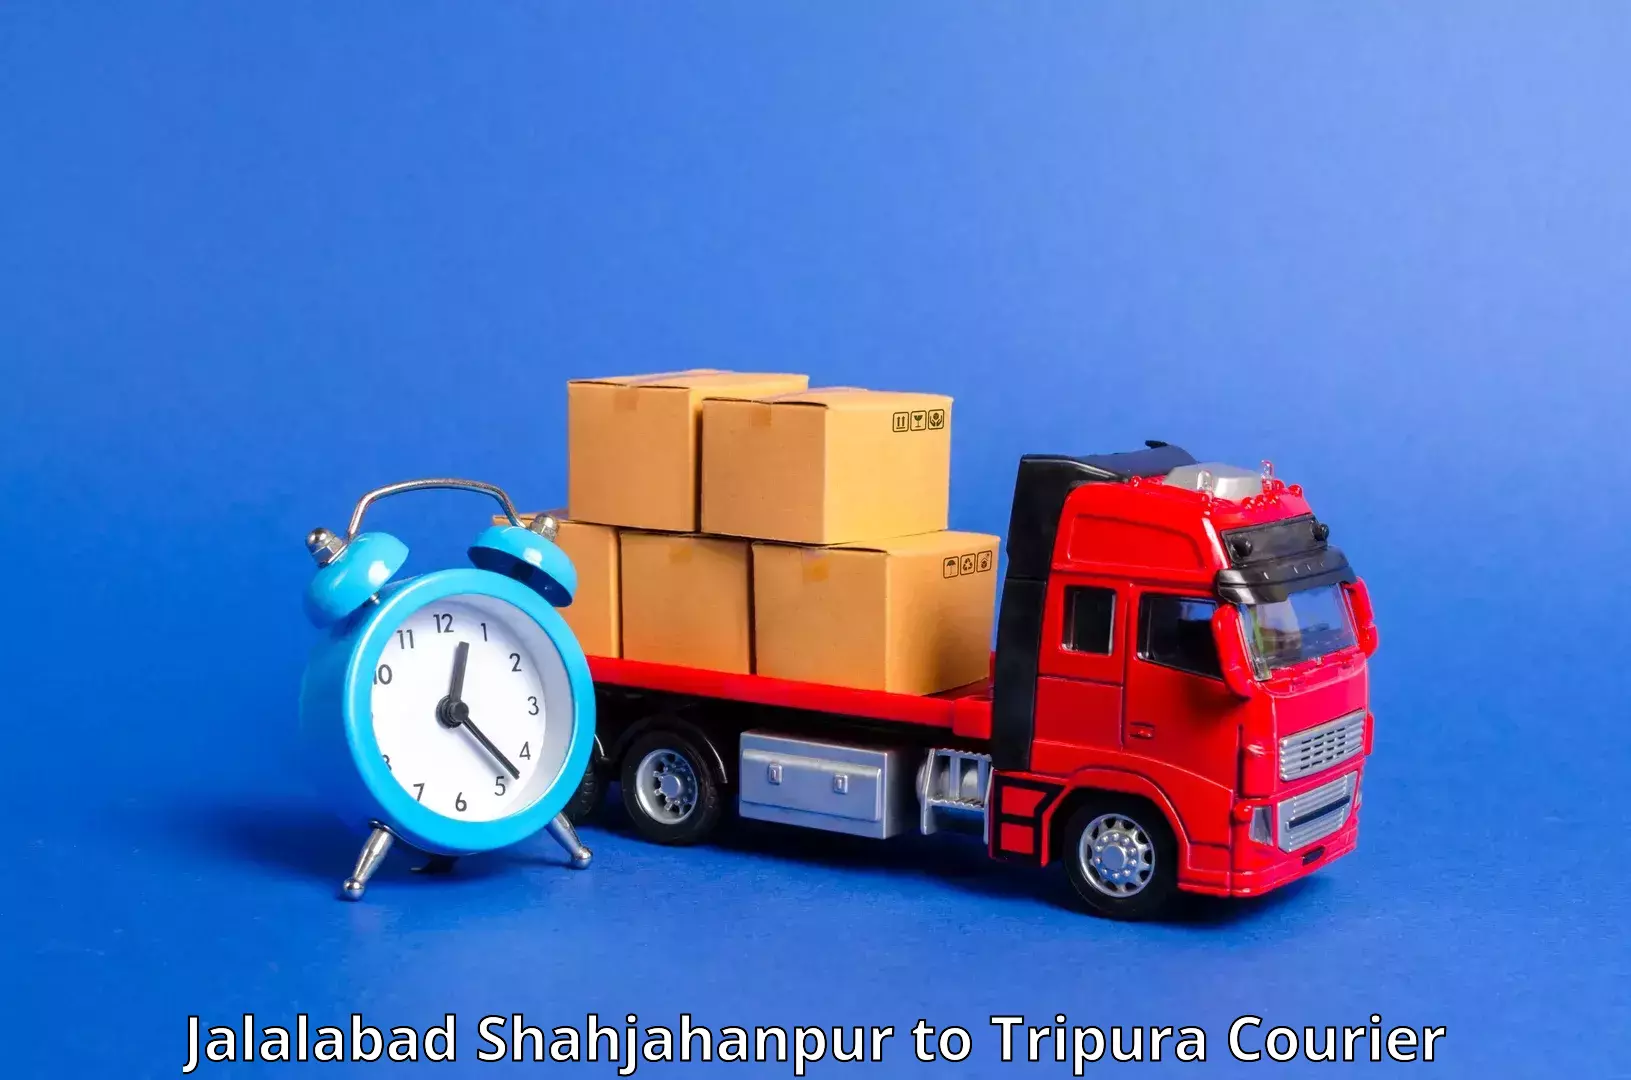 Express postal services Jalalabad Shahjahanpur to Udaipur Tripura